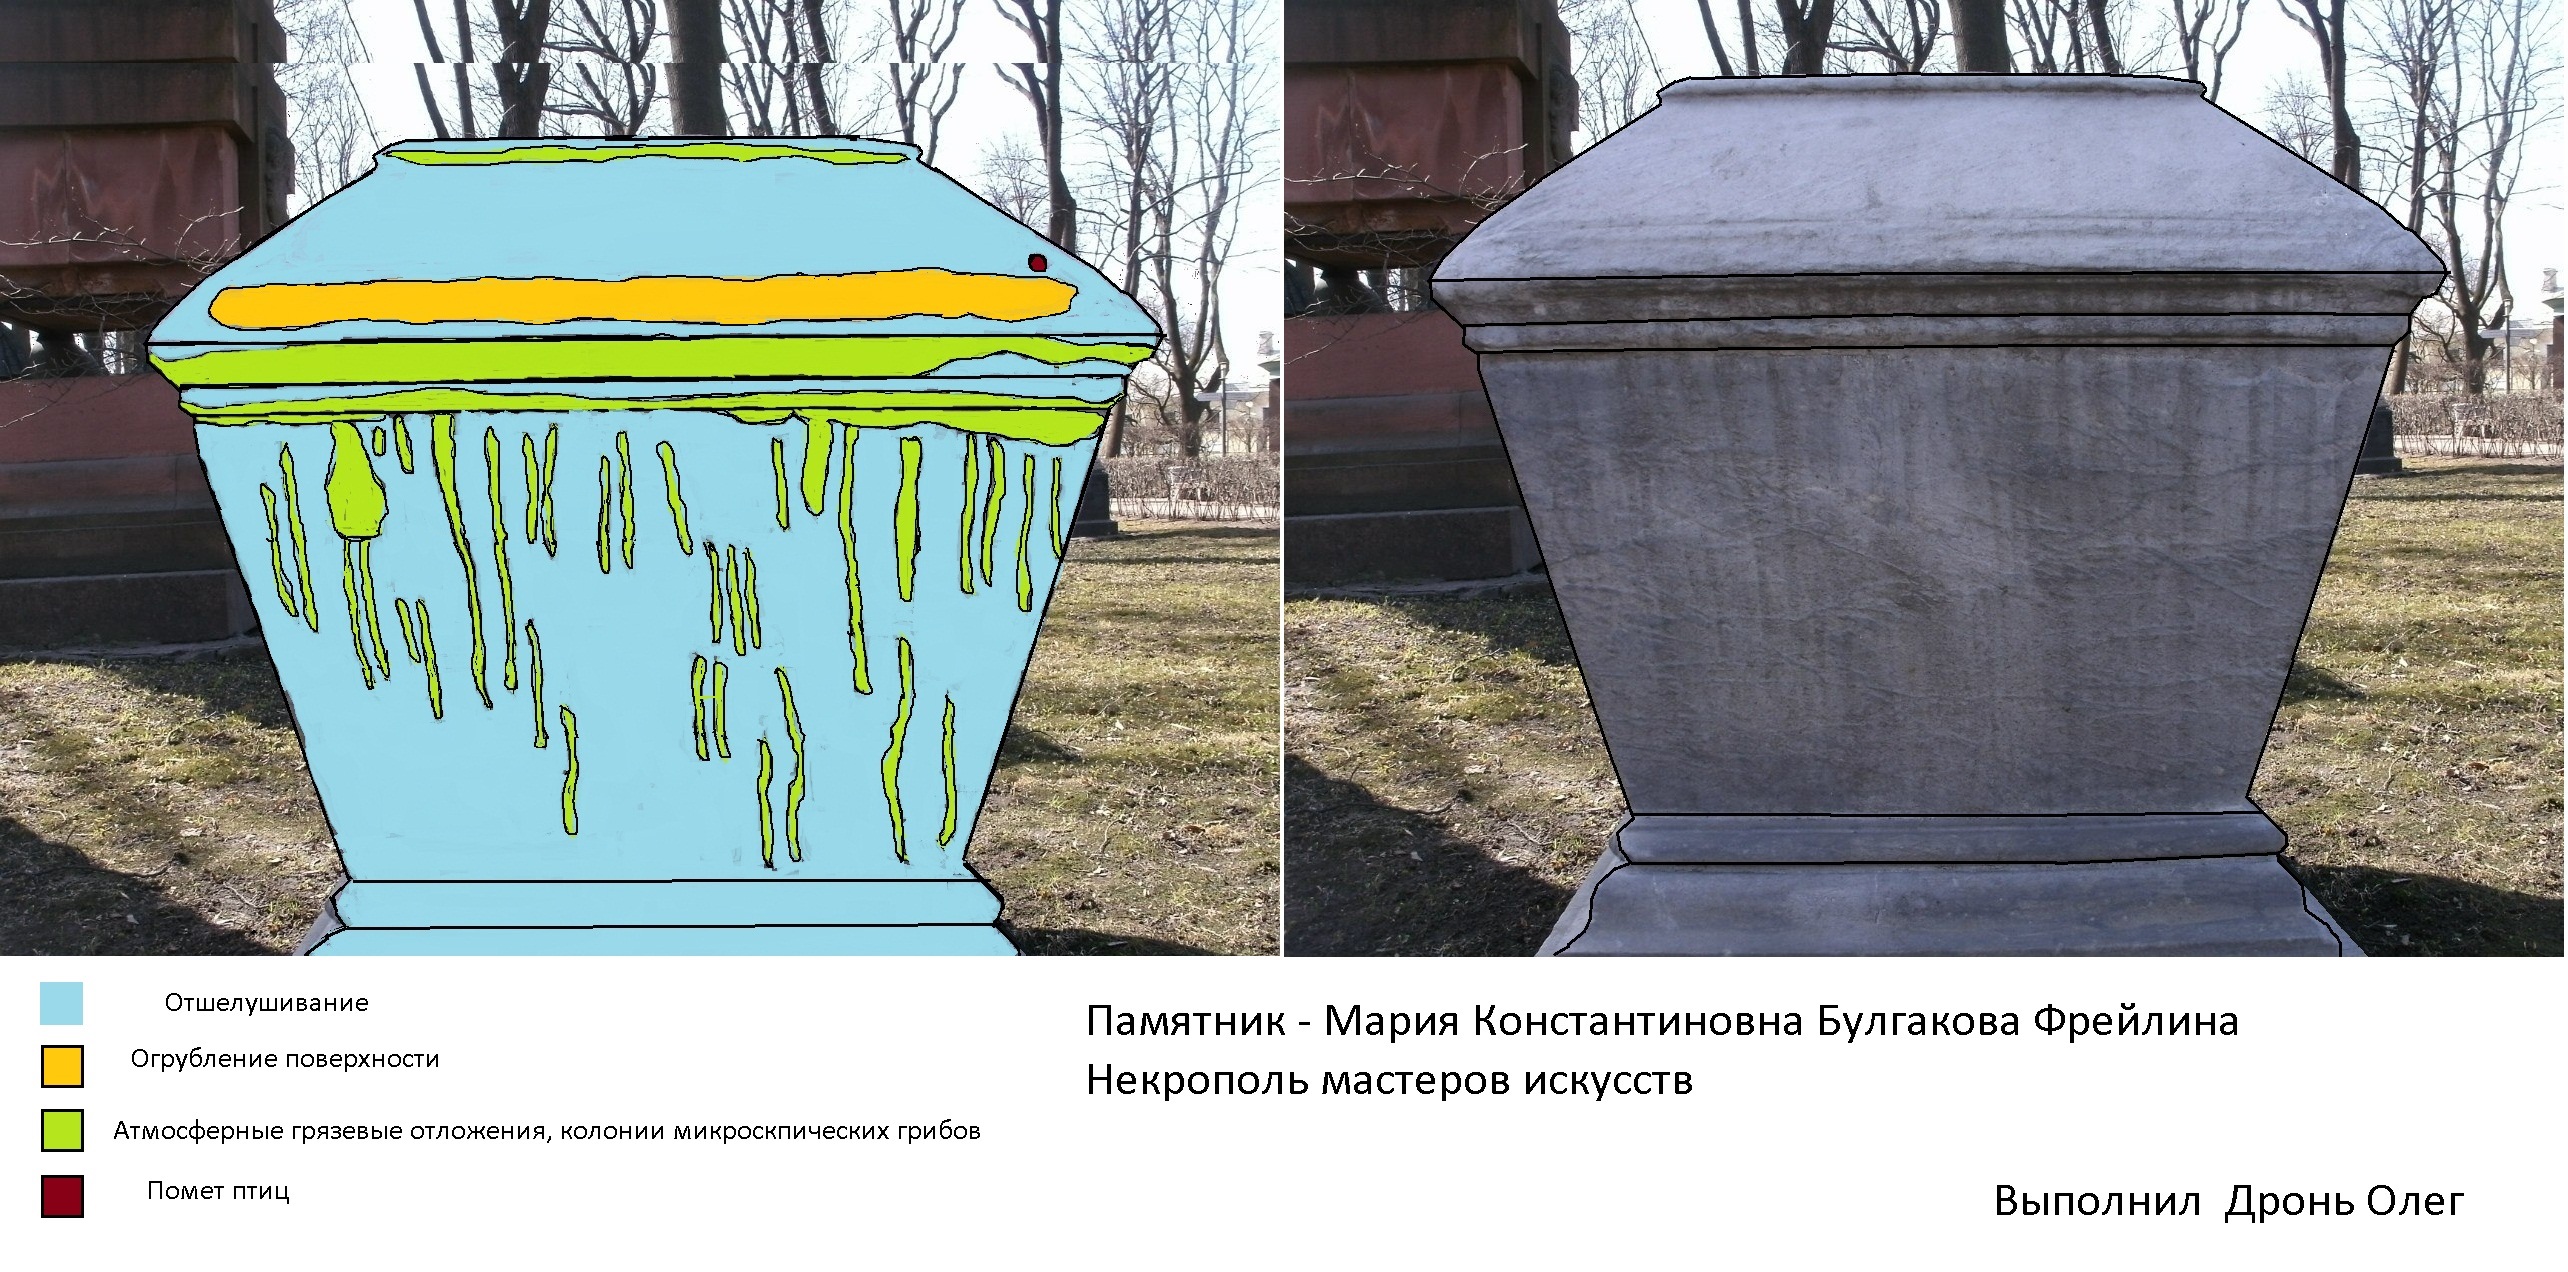 Карта форм  разрушений серого мрамора на памятнике М.К. Булгаковой; а — карта; б — фото.